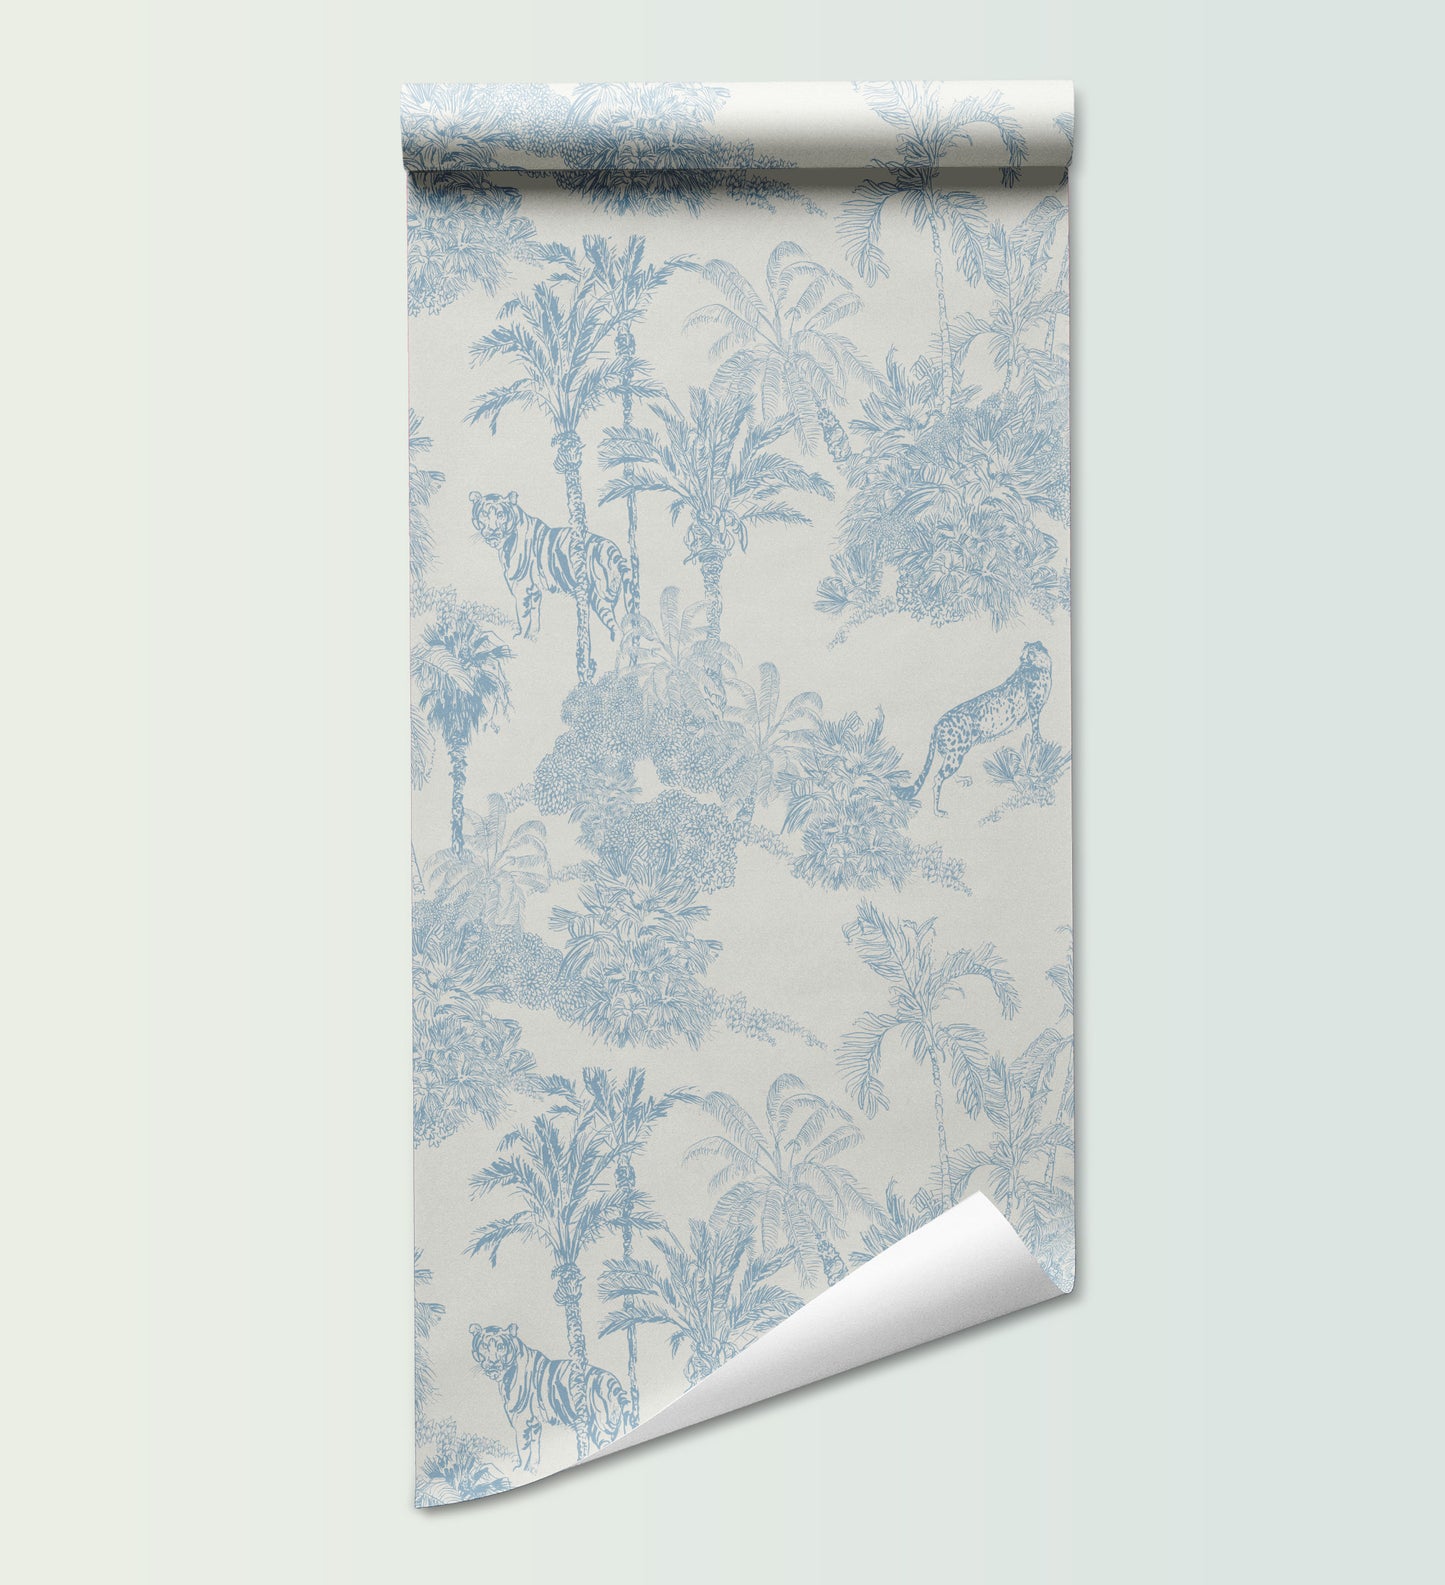  blue toile de jouy peel and stick removable wallpaper